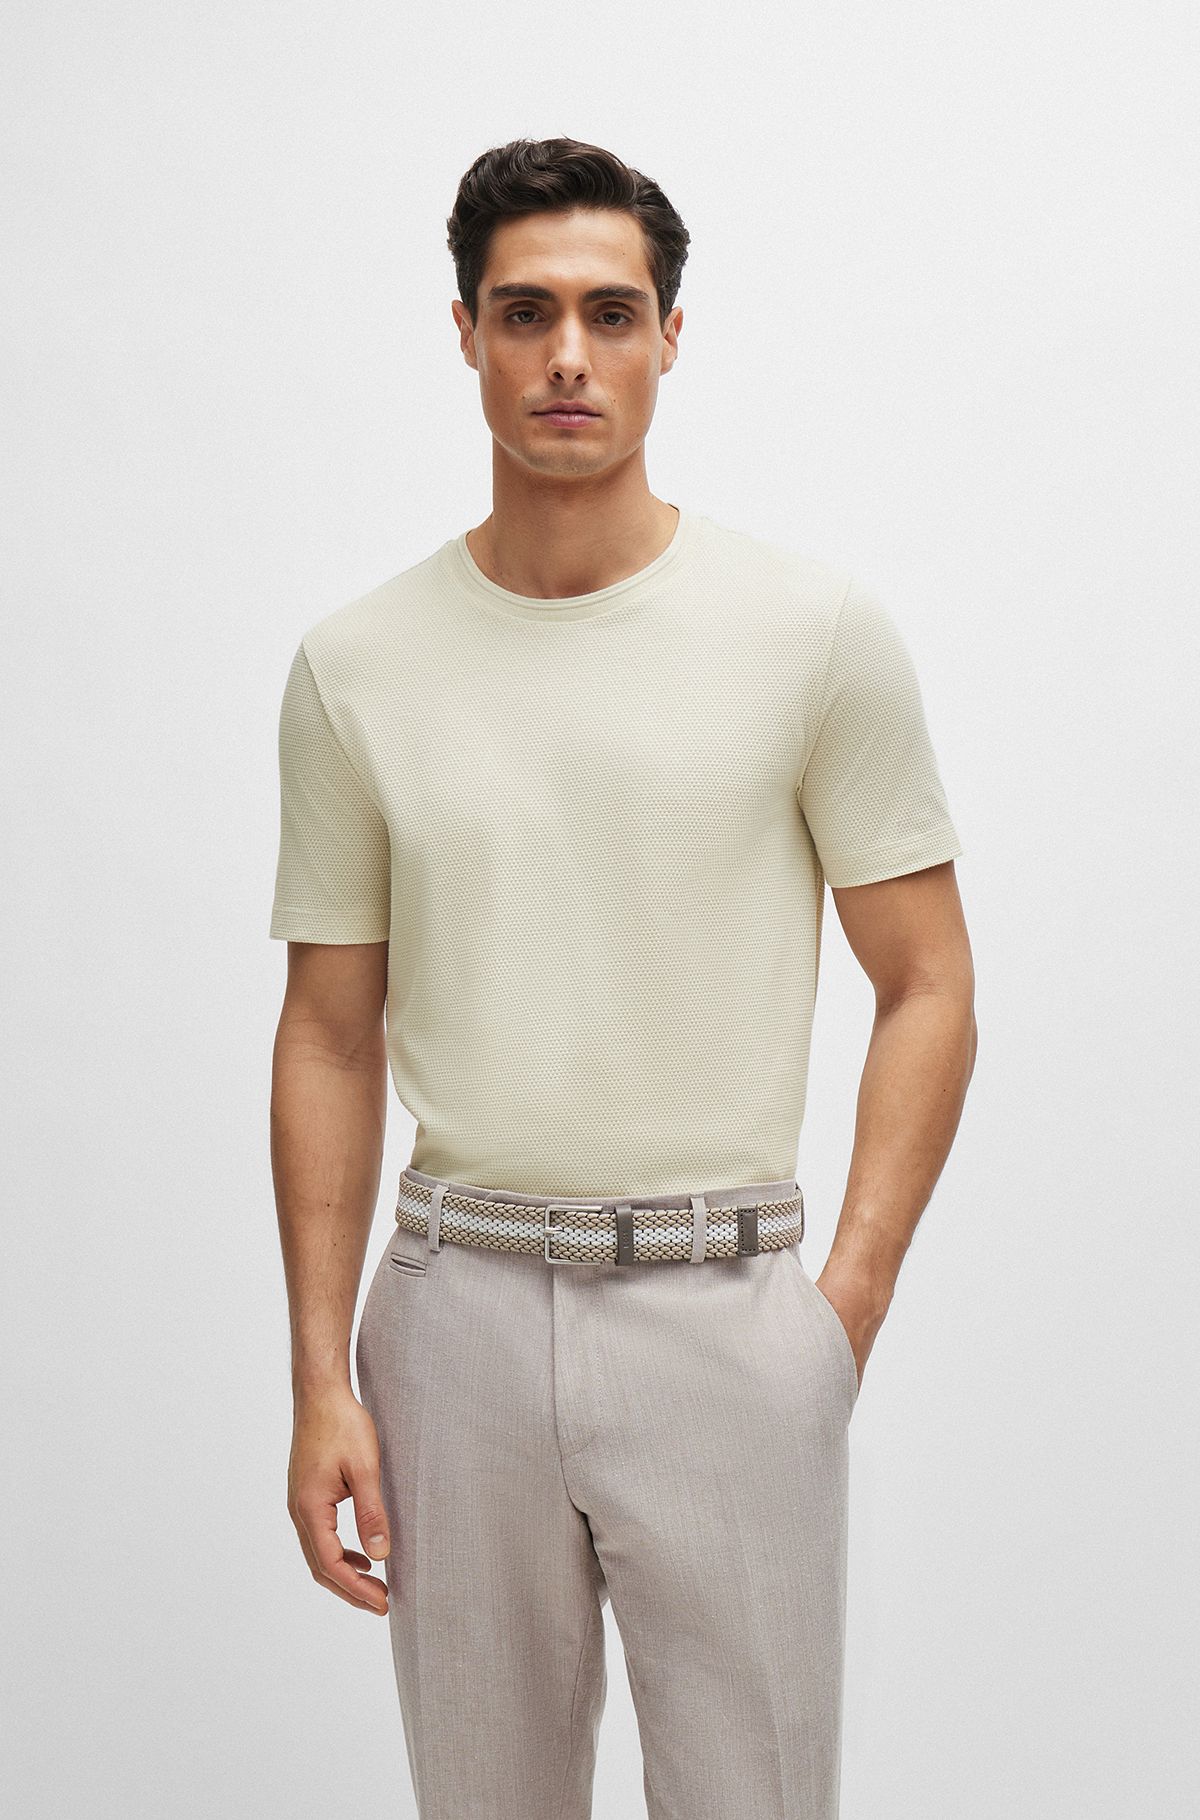 Cotton-blend T-shirt with bubble-jacquard structure, Natural